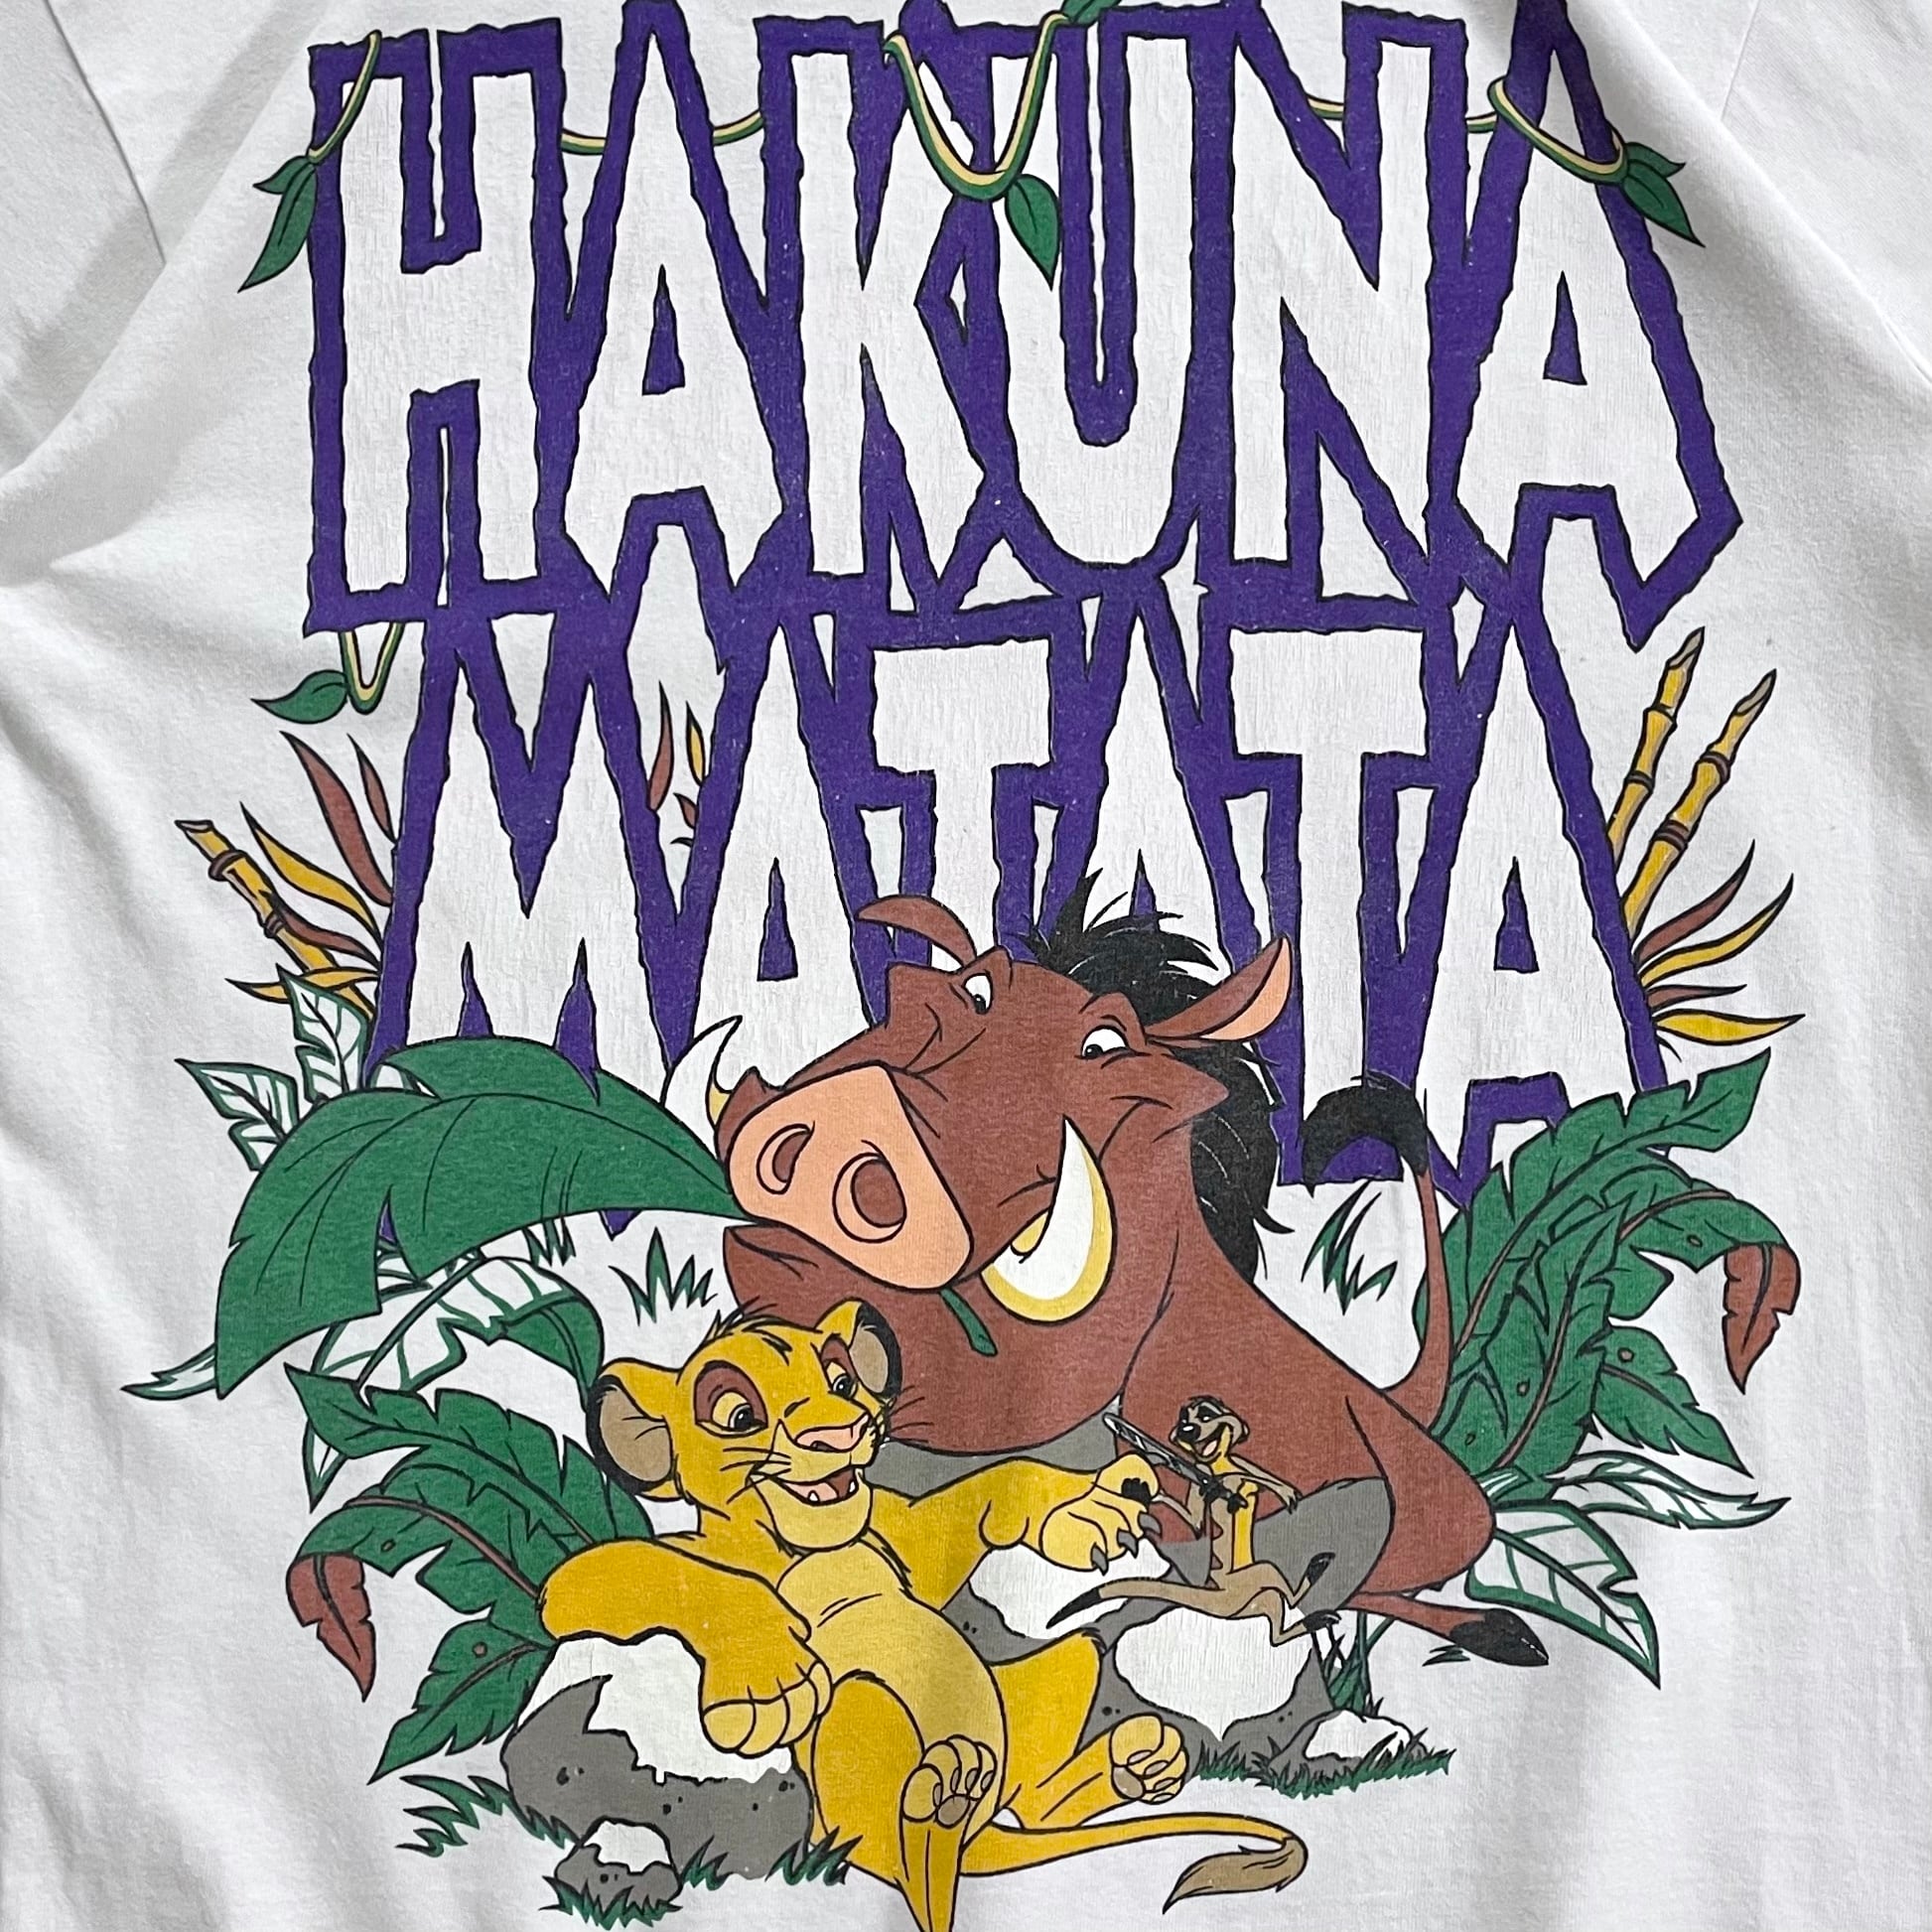 USA製　disney ライオンキング　HAKUNA MATATA tシャツやまびこ市場tシャツ倉庫